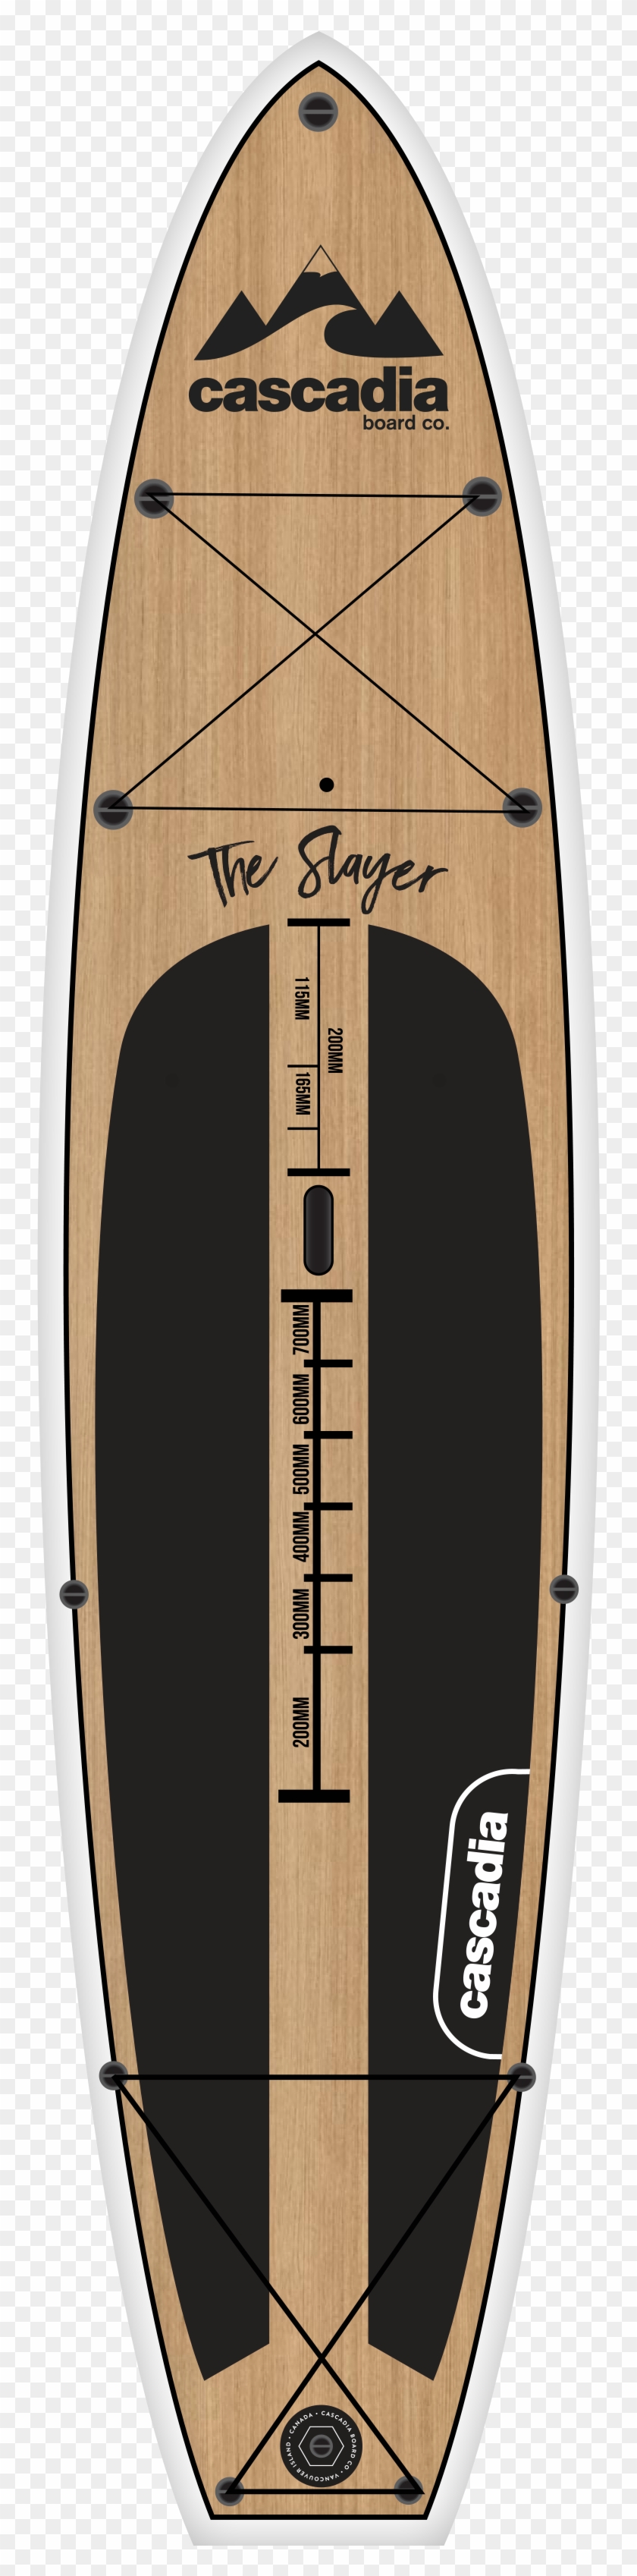 Paddle Boards Cascadia Board Co - Surfboard Clipart #2490166